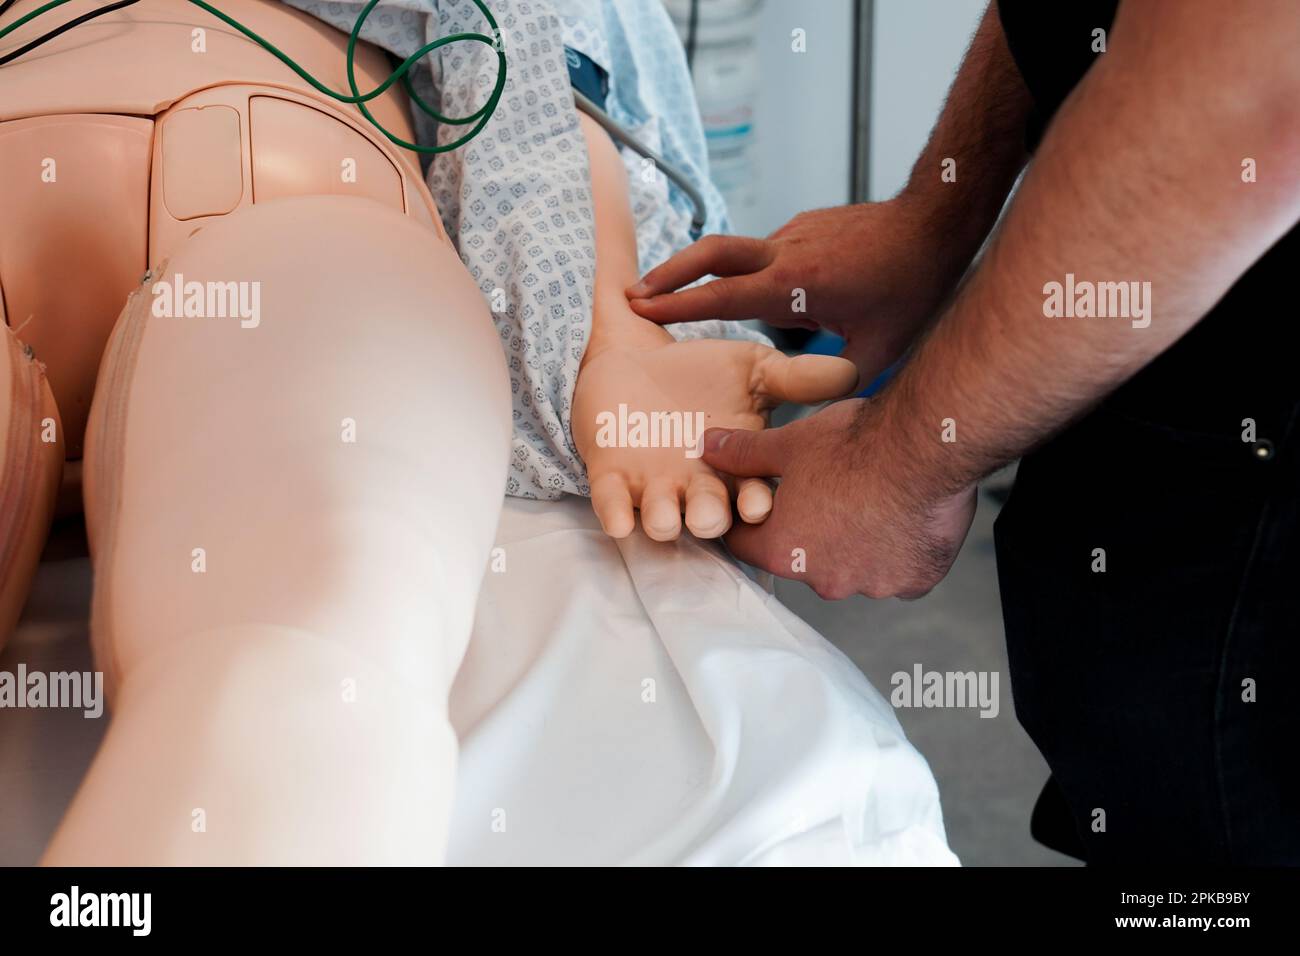 Nurses and emergency nurses undergo training at School of Medicine on emergency procedures and resuscitation. Simulation session on a SimMan dummy. Stock Photo